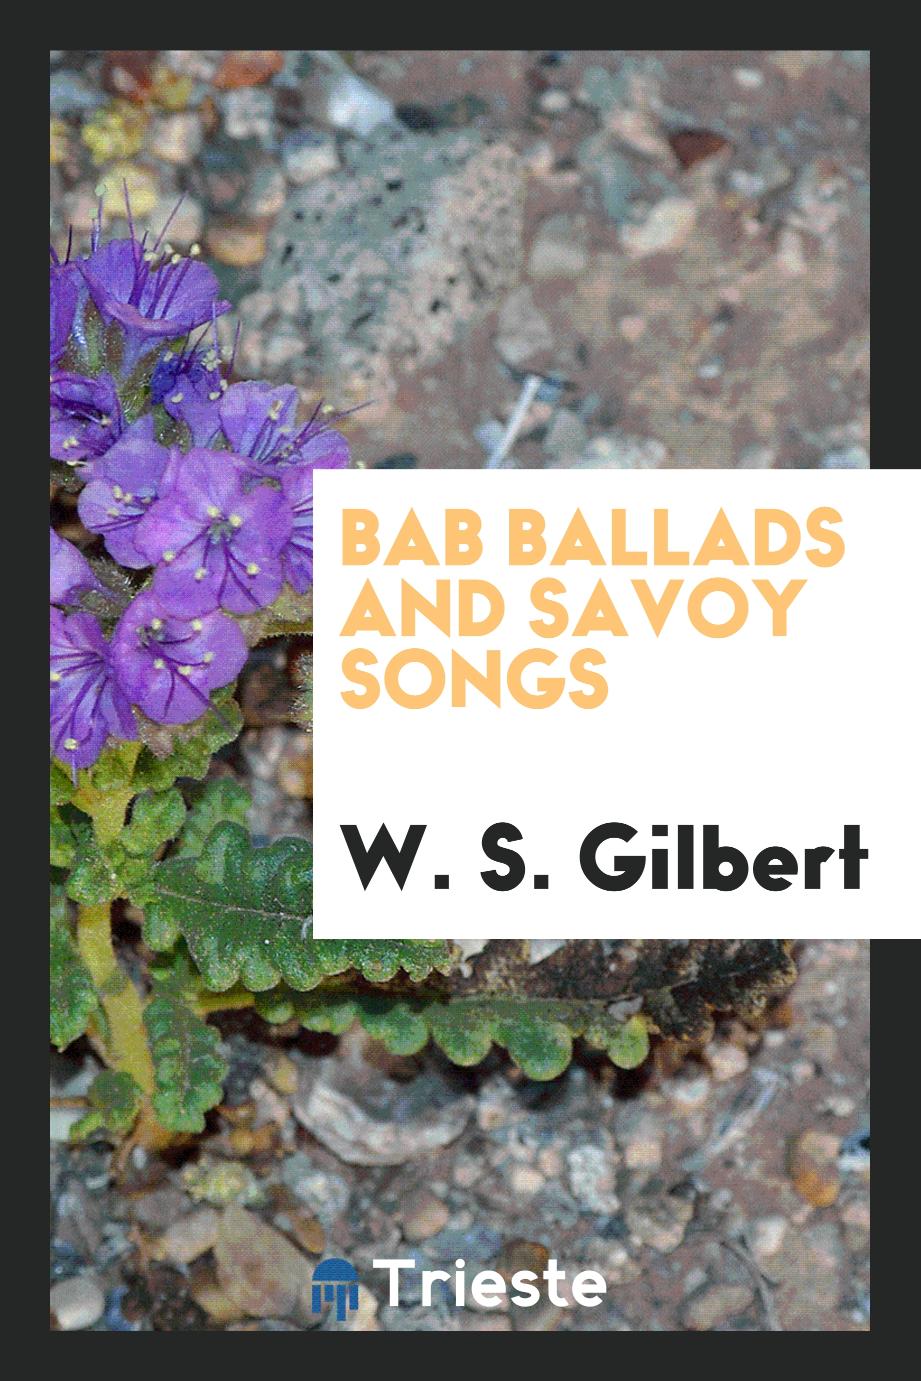 Bab ballads and Savoy songs